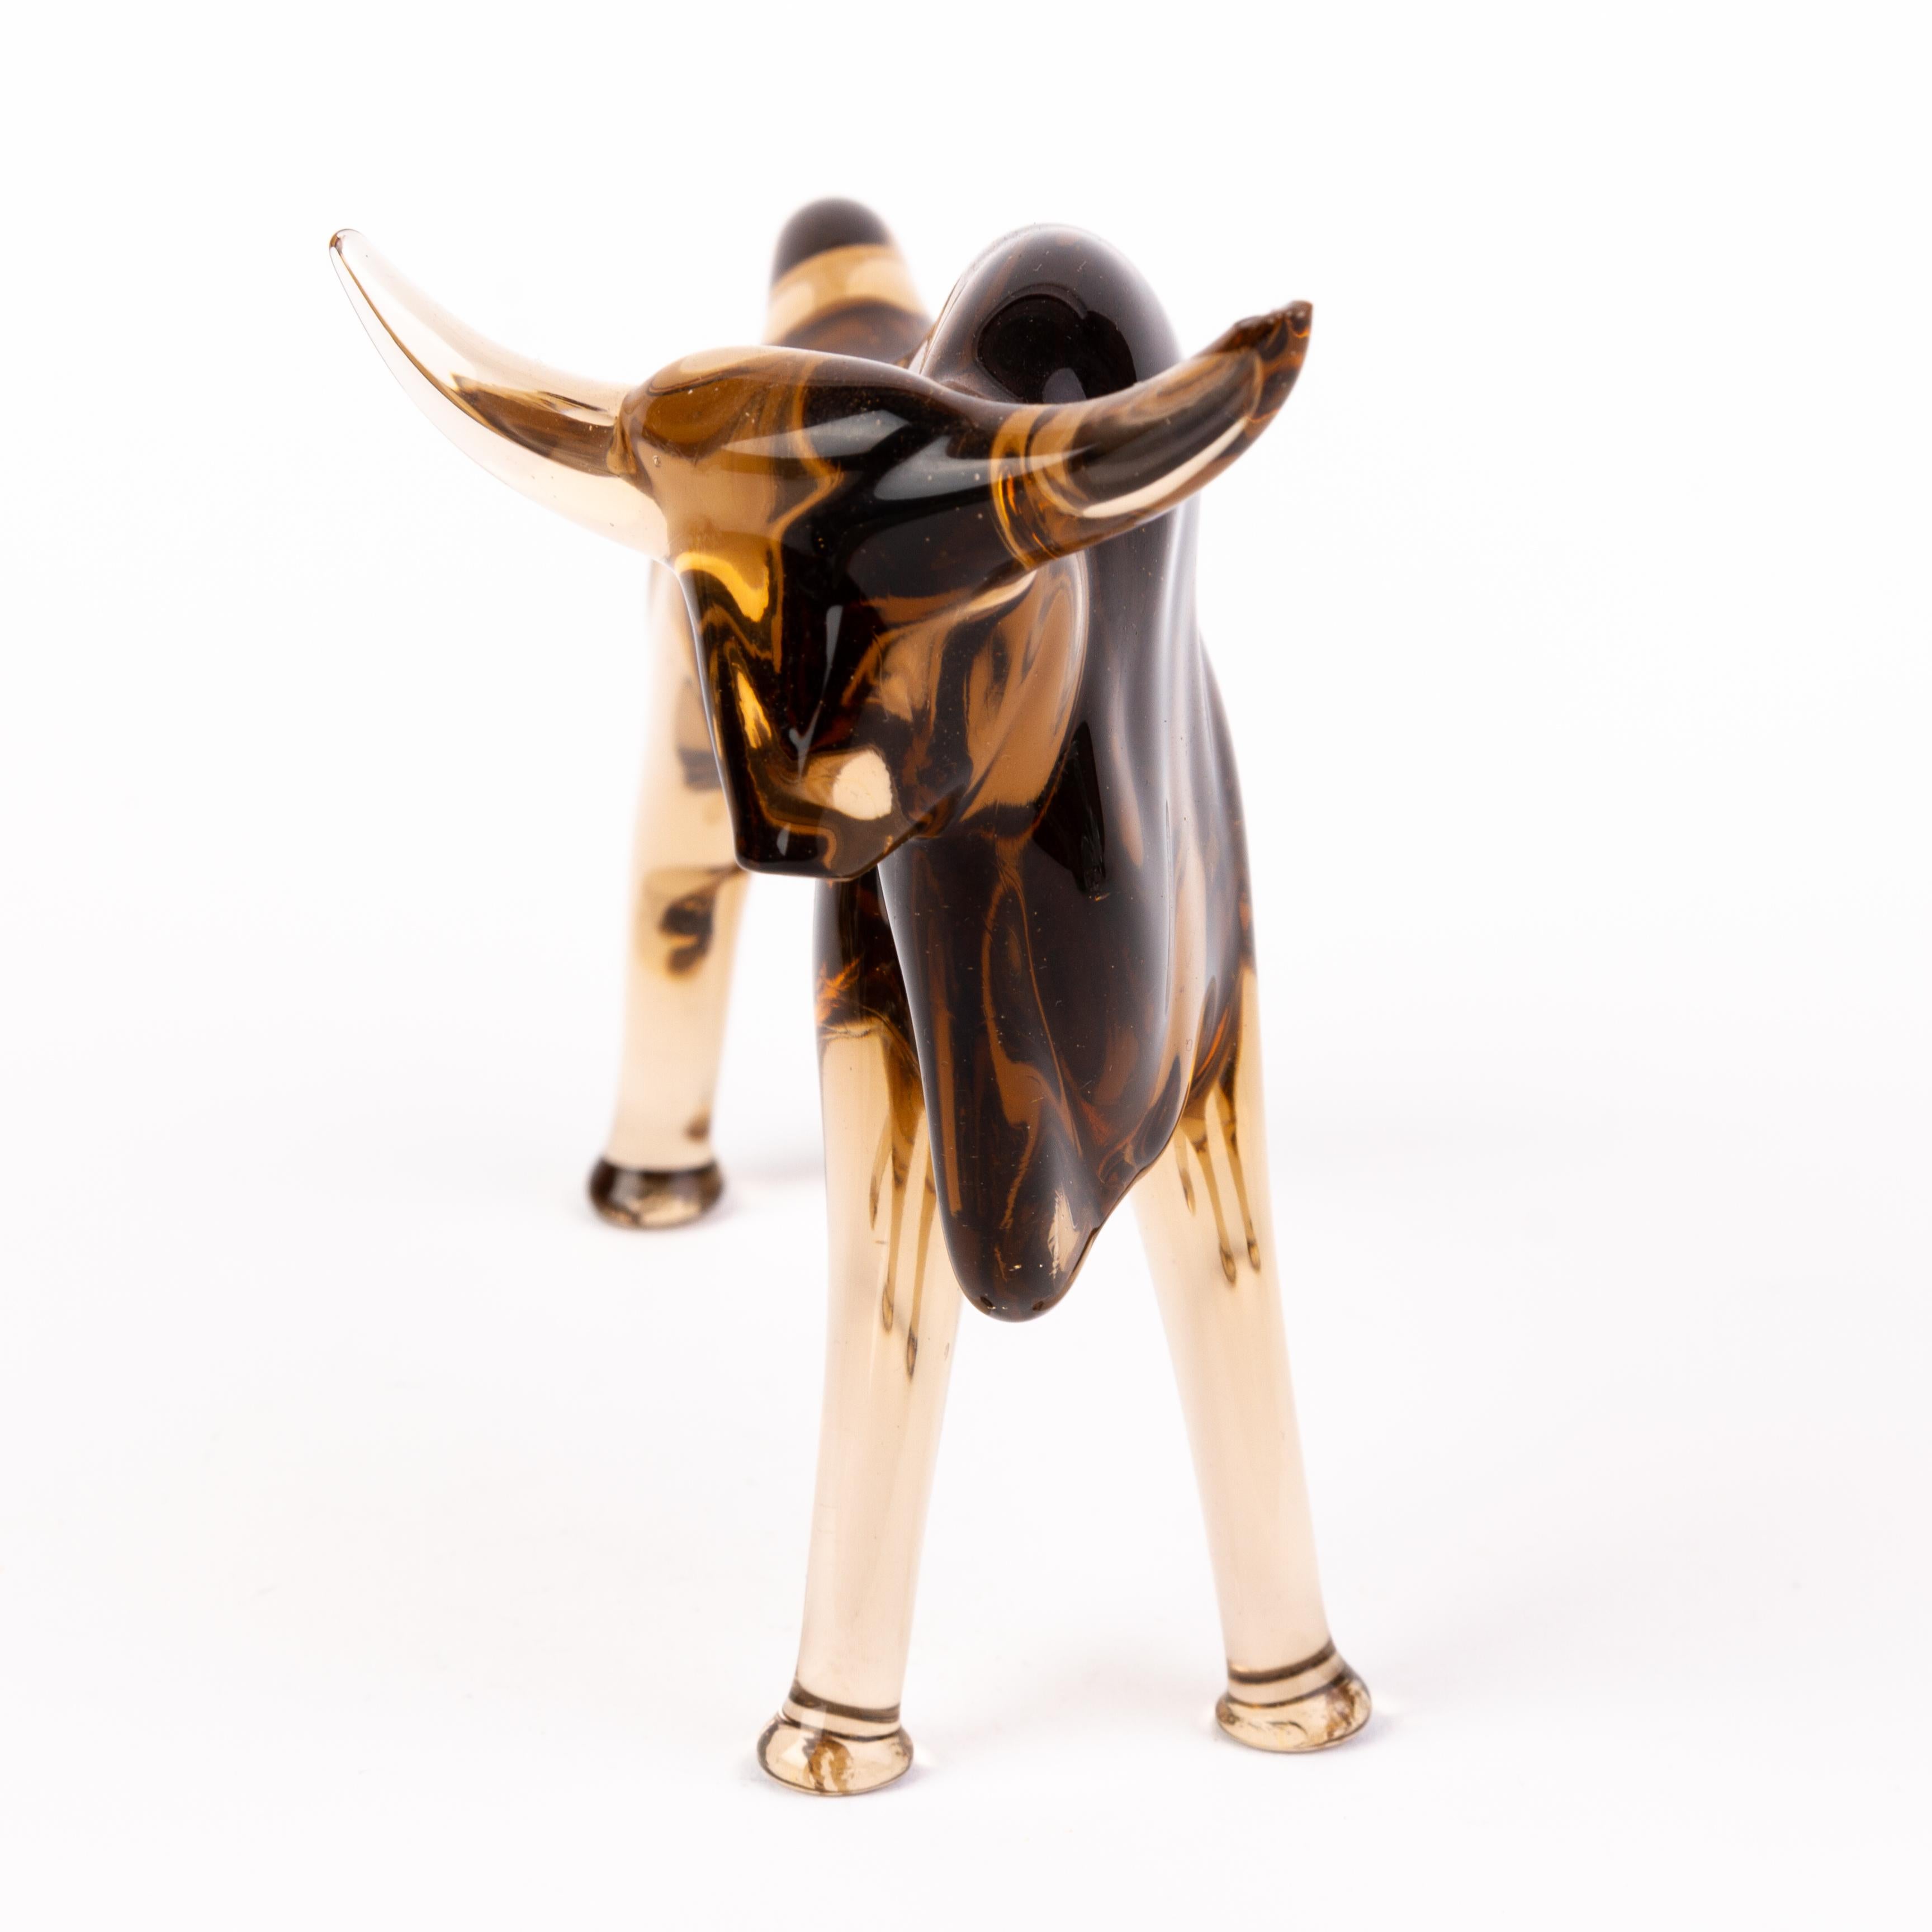 Murano Venetian Glass Designer Sculpture Bull
Good condition
Free international shipping.